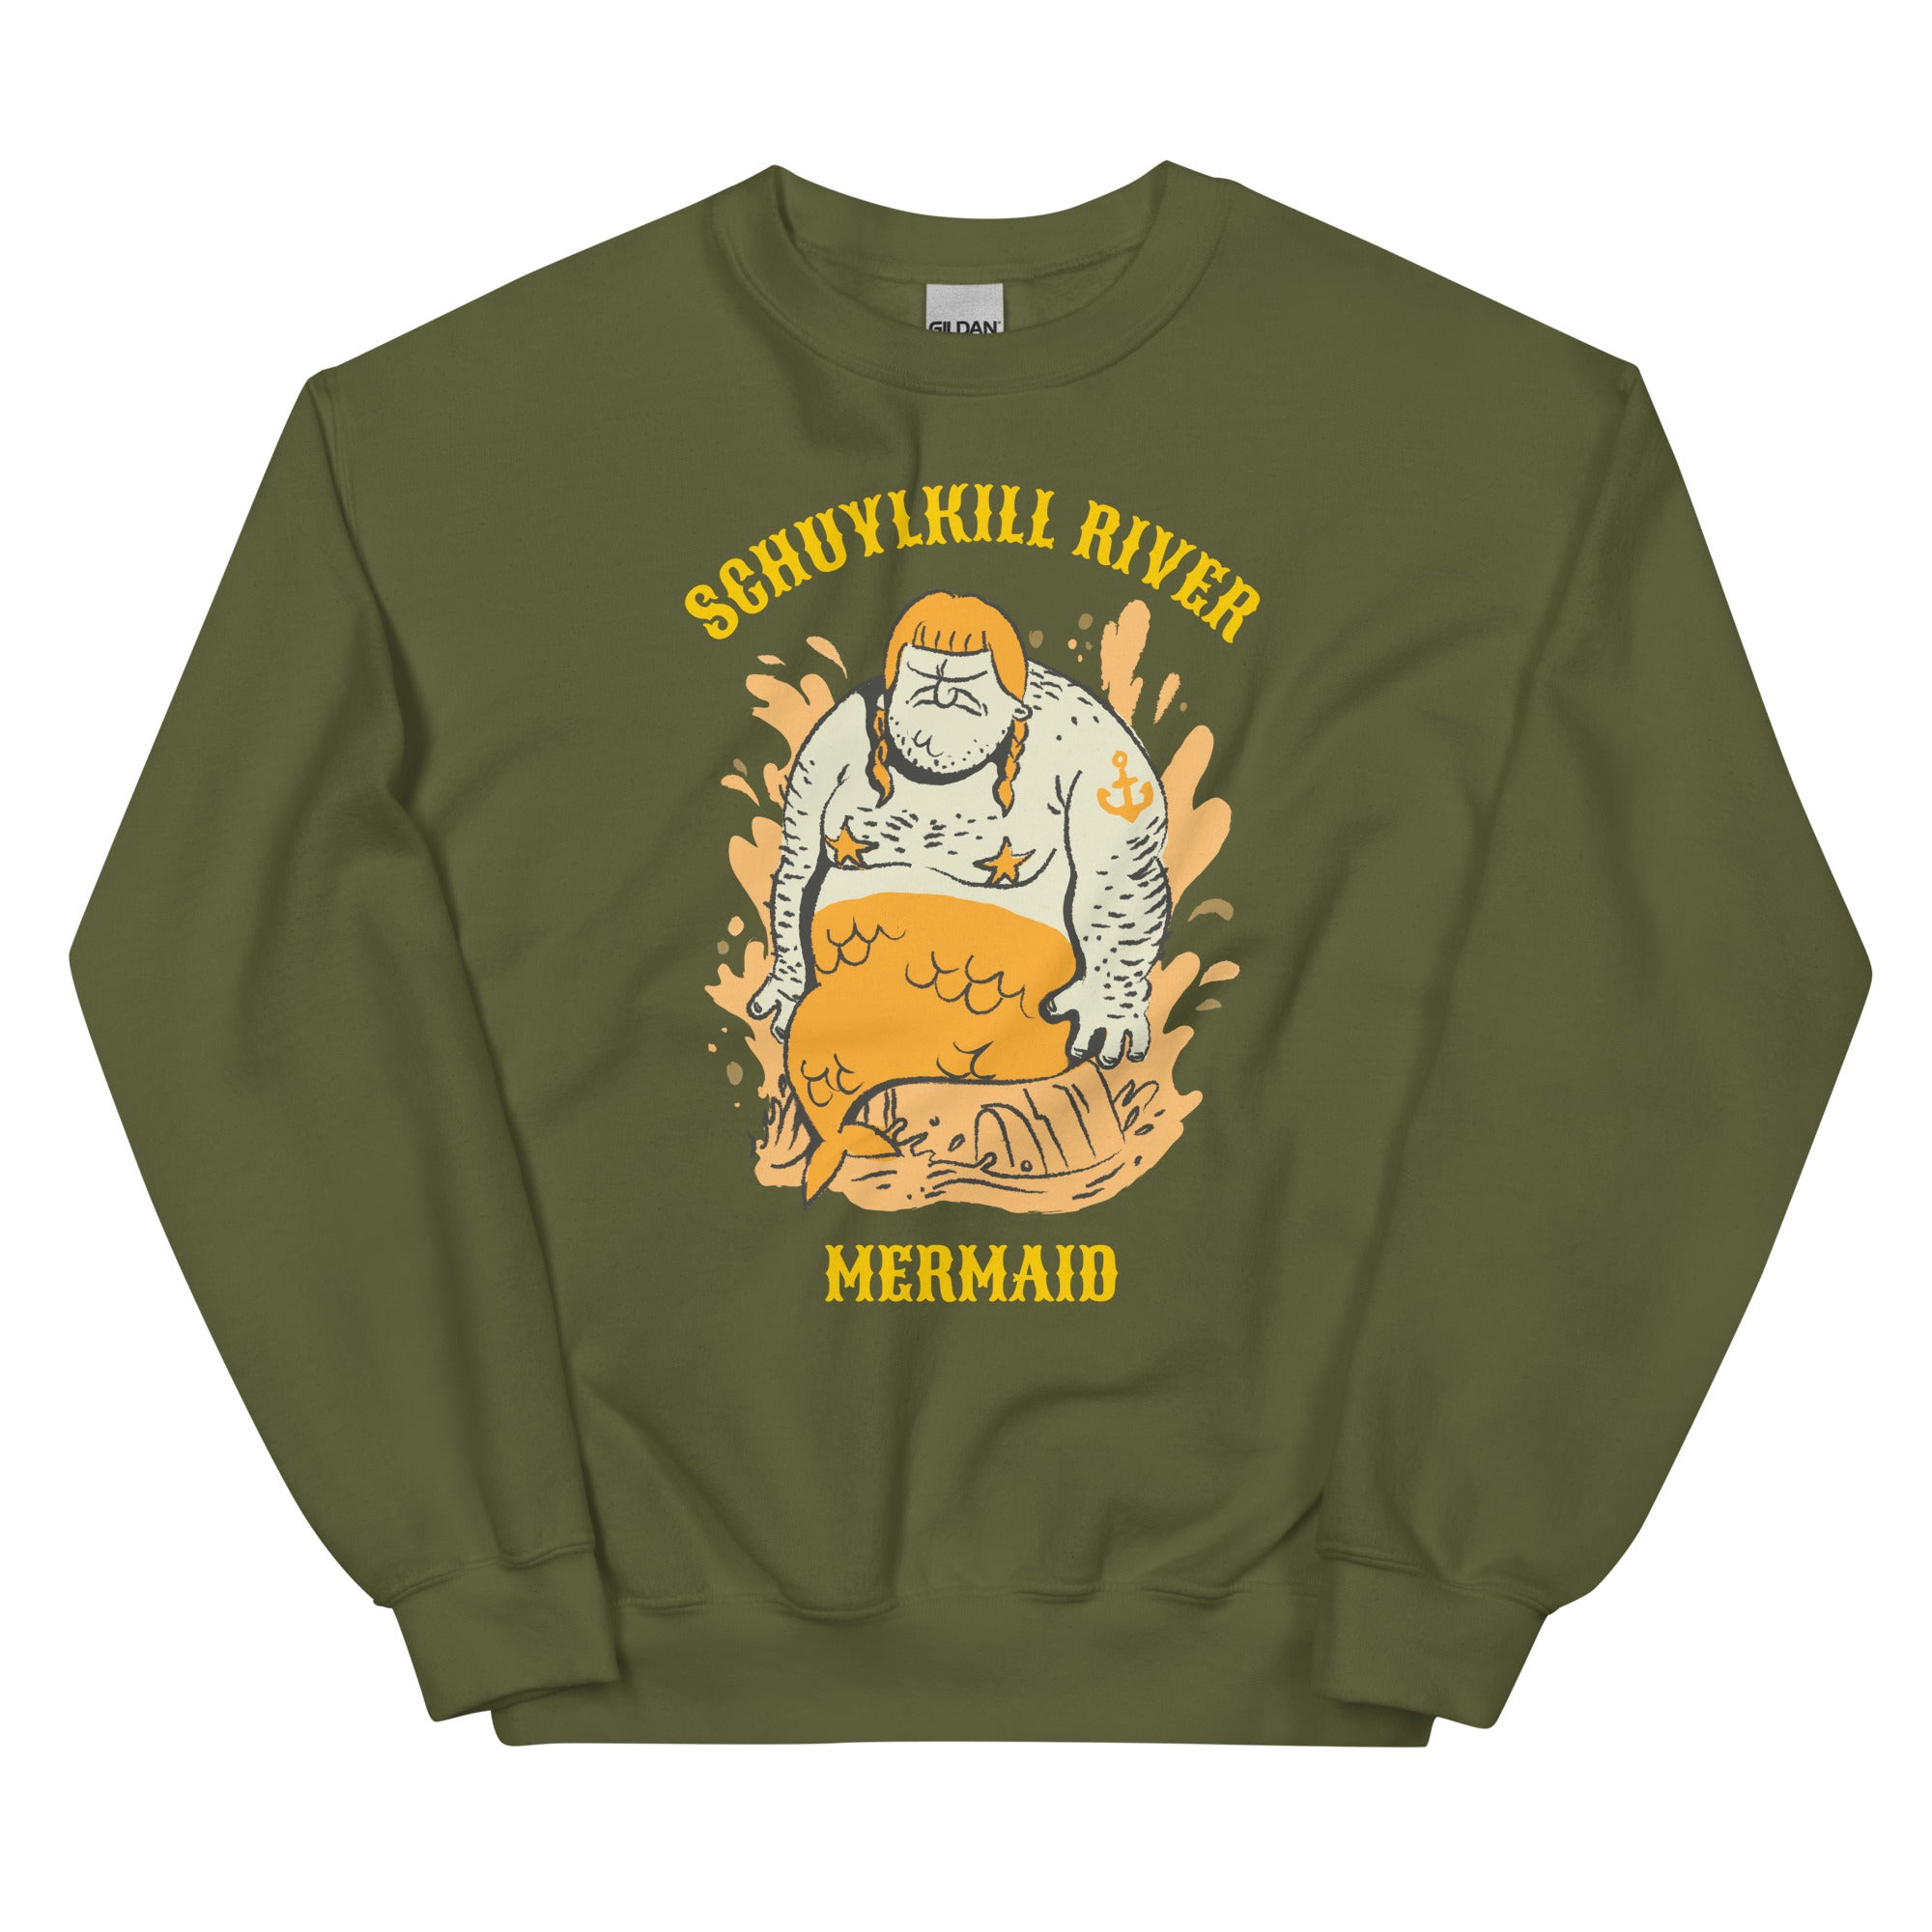 Funny Philadelphia Schuylkill River Mermaid army green sweatshirt from Phillygoat